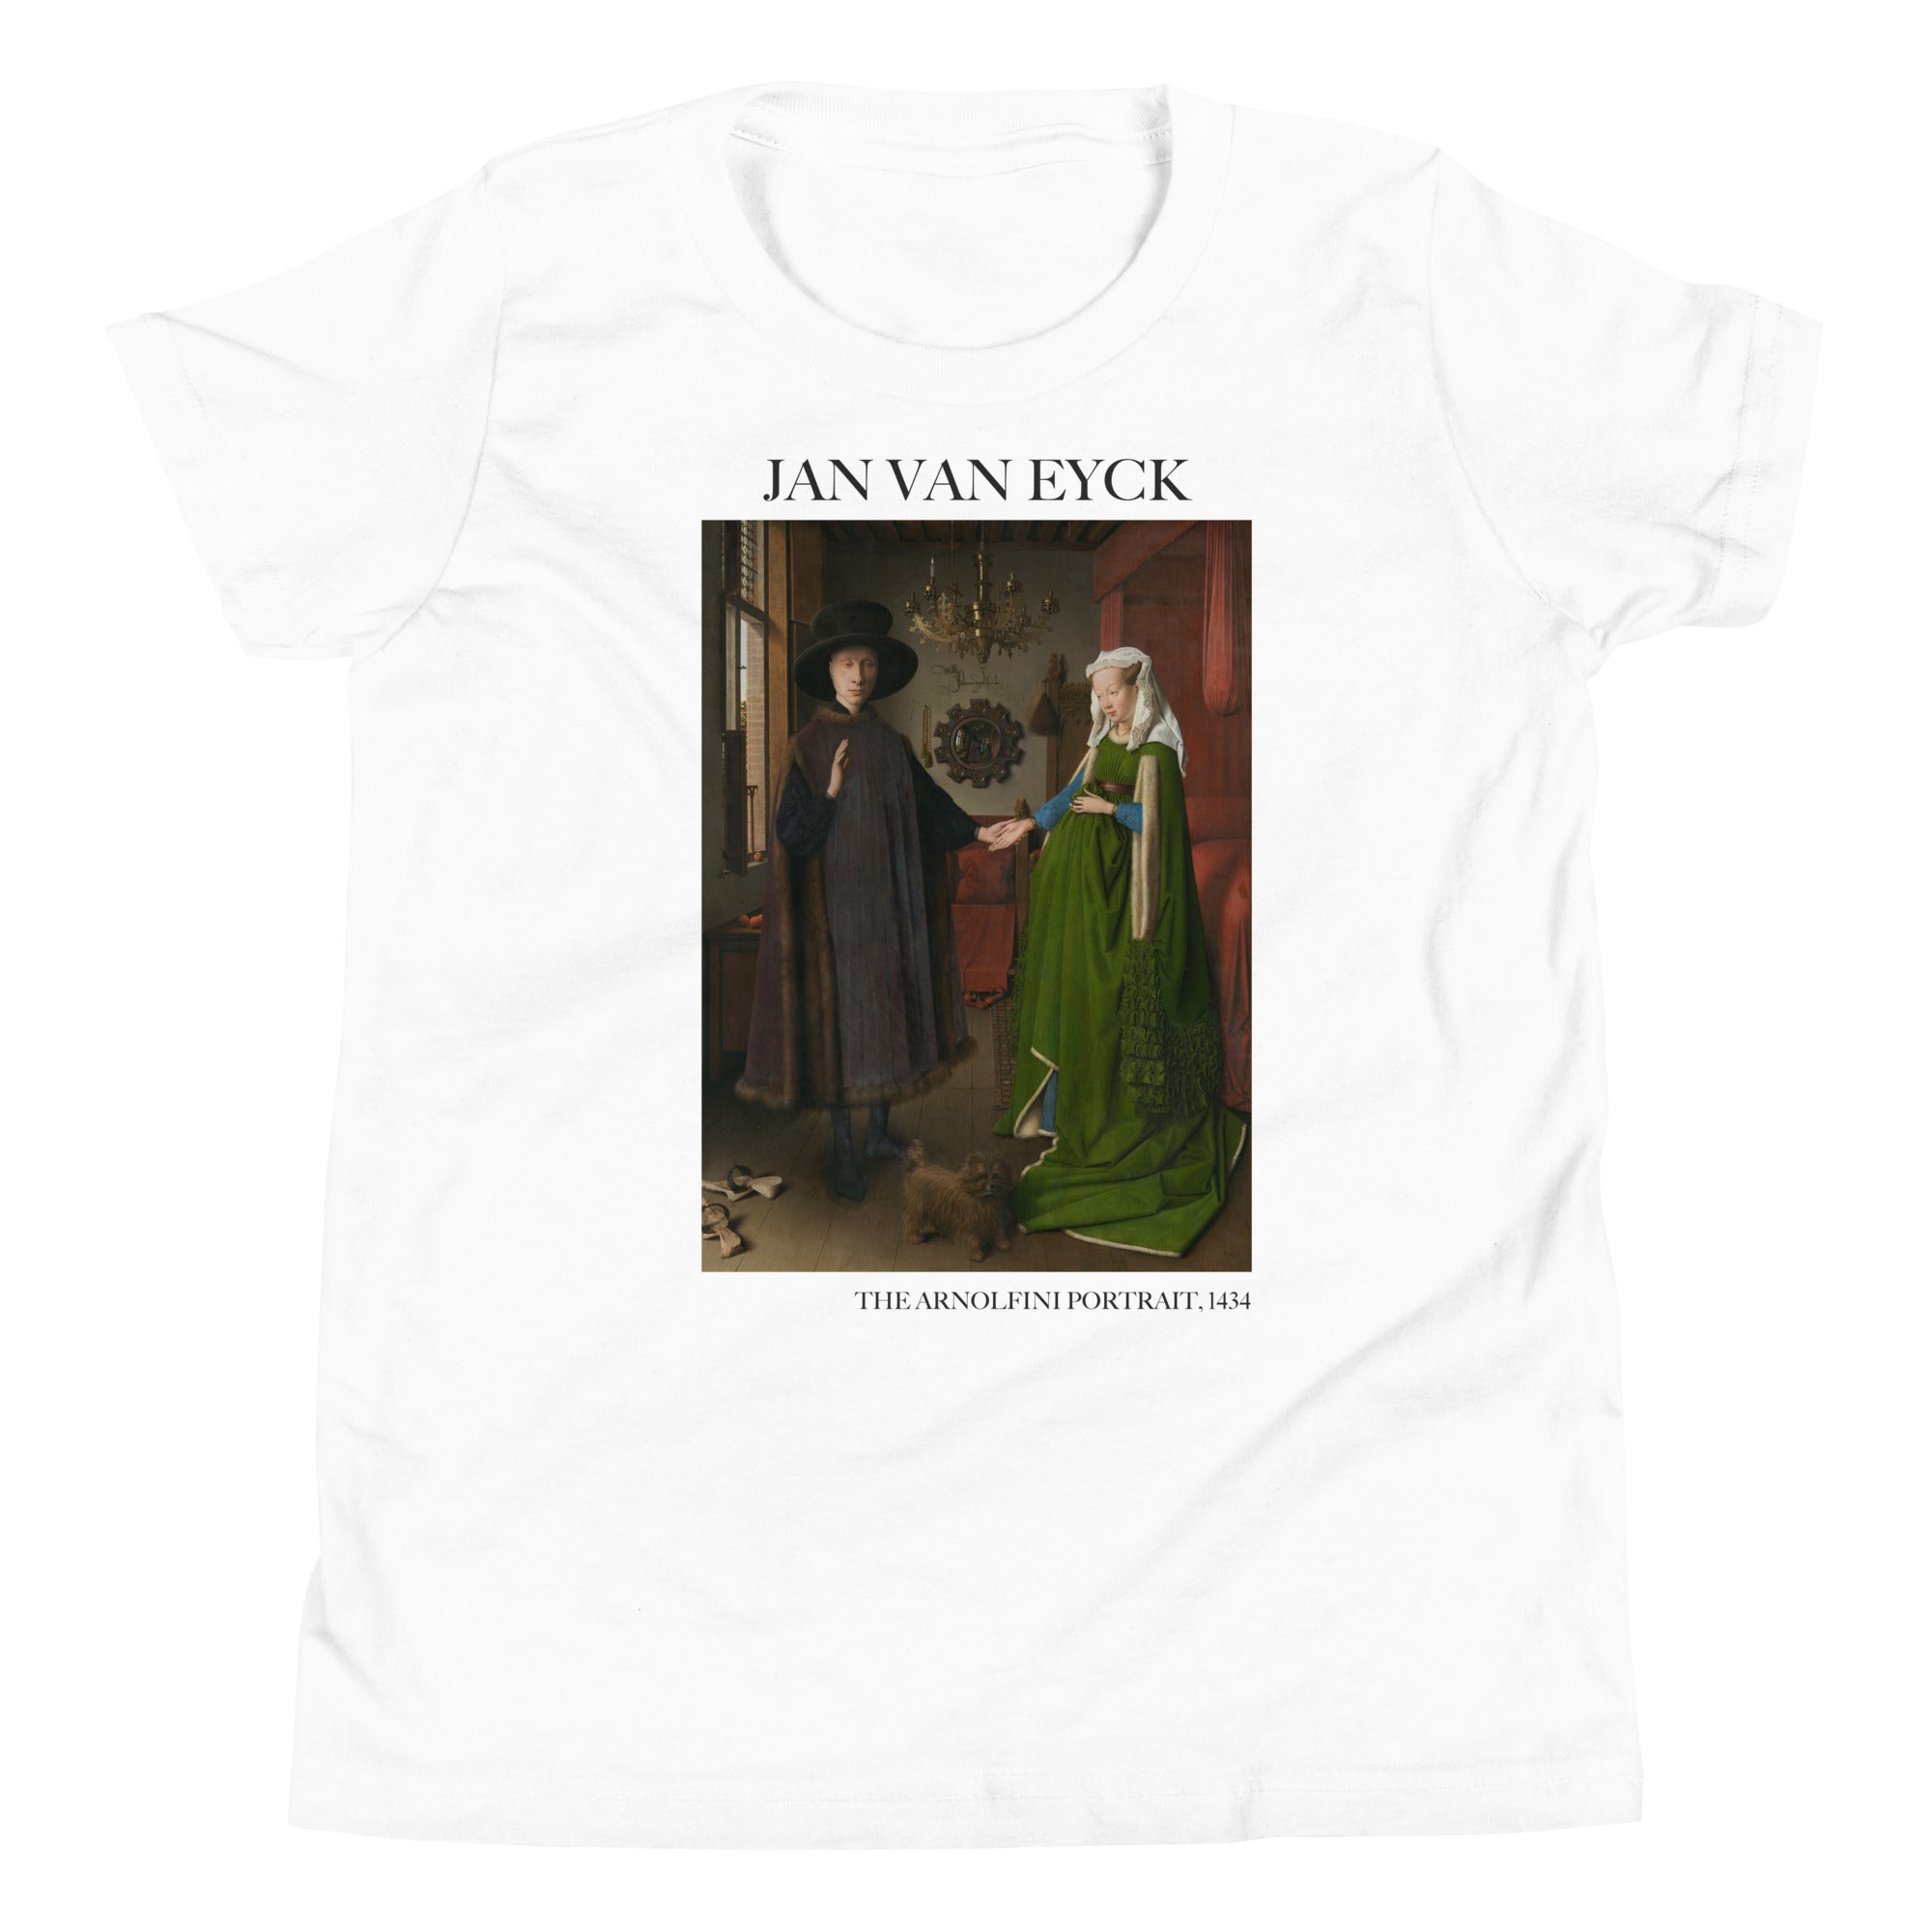 Jan van Eyck 'The Arnolfini Portrait' Famous Painting Short Sleeve T-Shirt | Premium Youth Art Tee